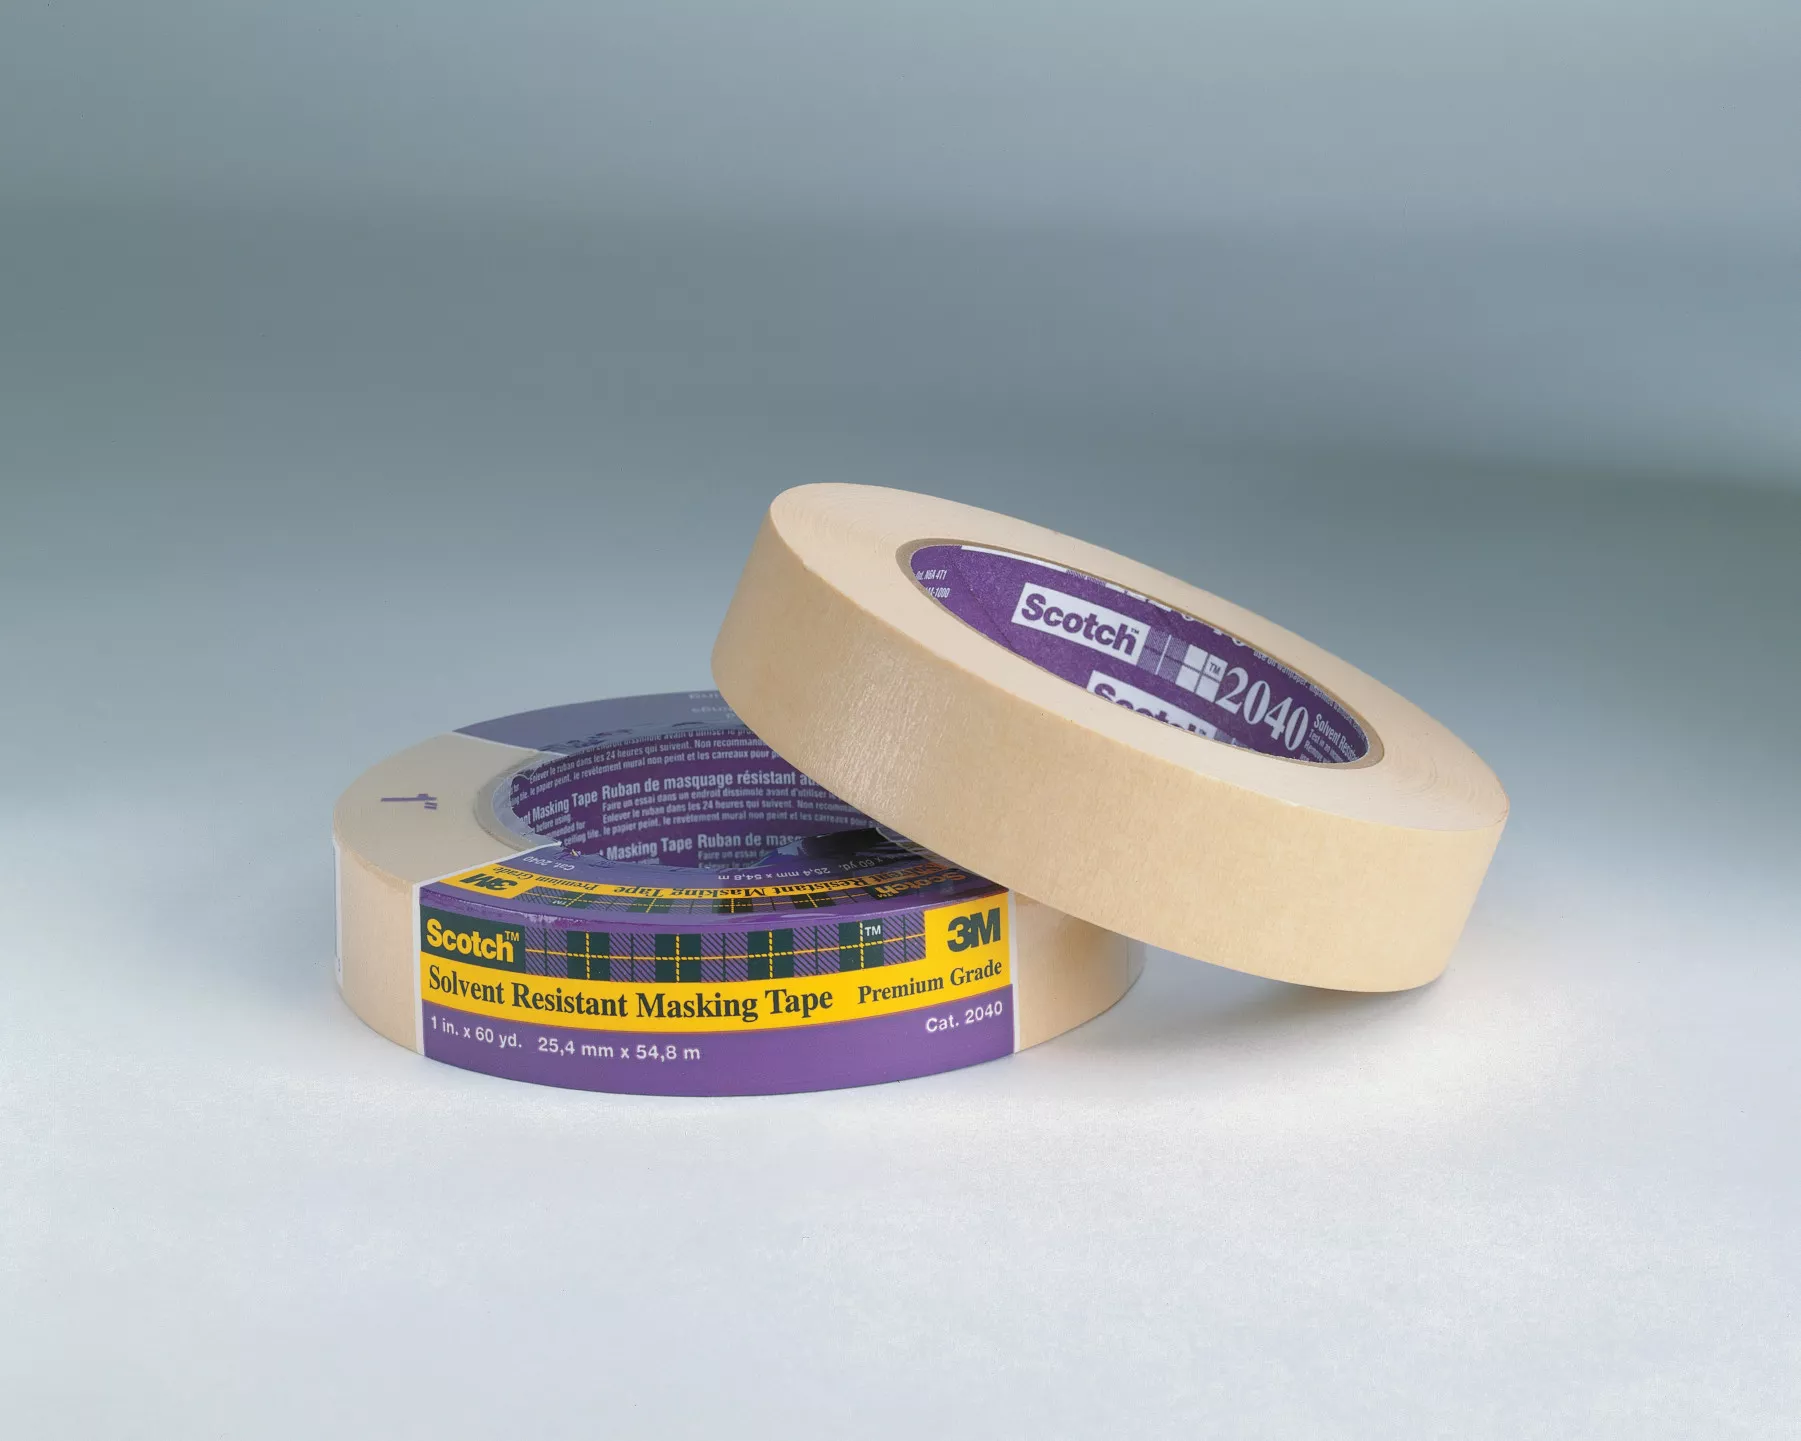 Scotch® Solvent Resistant Masking Tape 2040-24A-BK, 24 mm x 55 m, 36 per
case